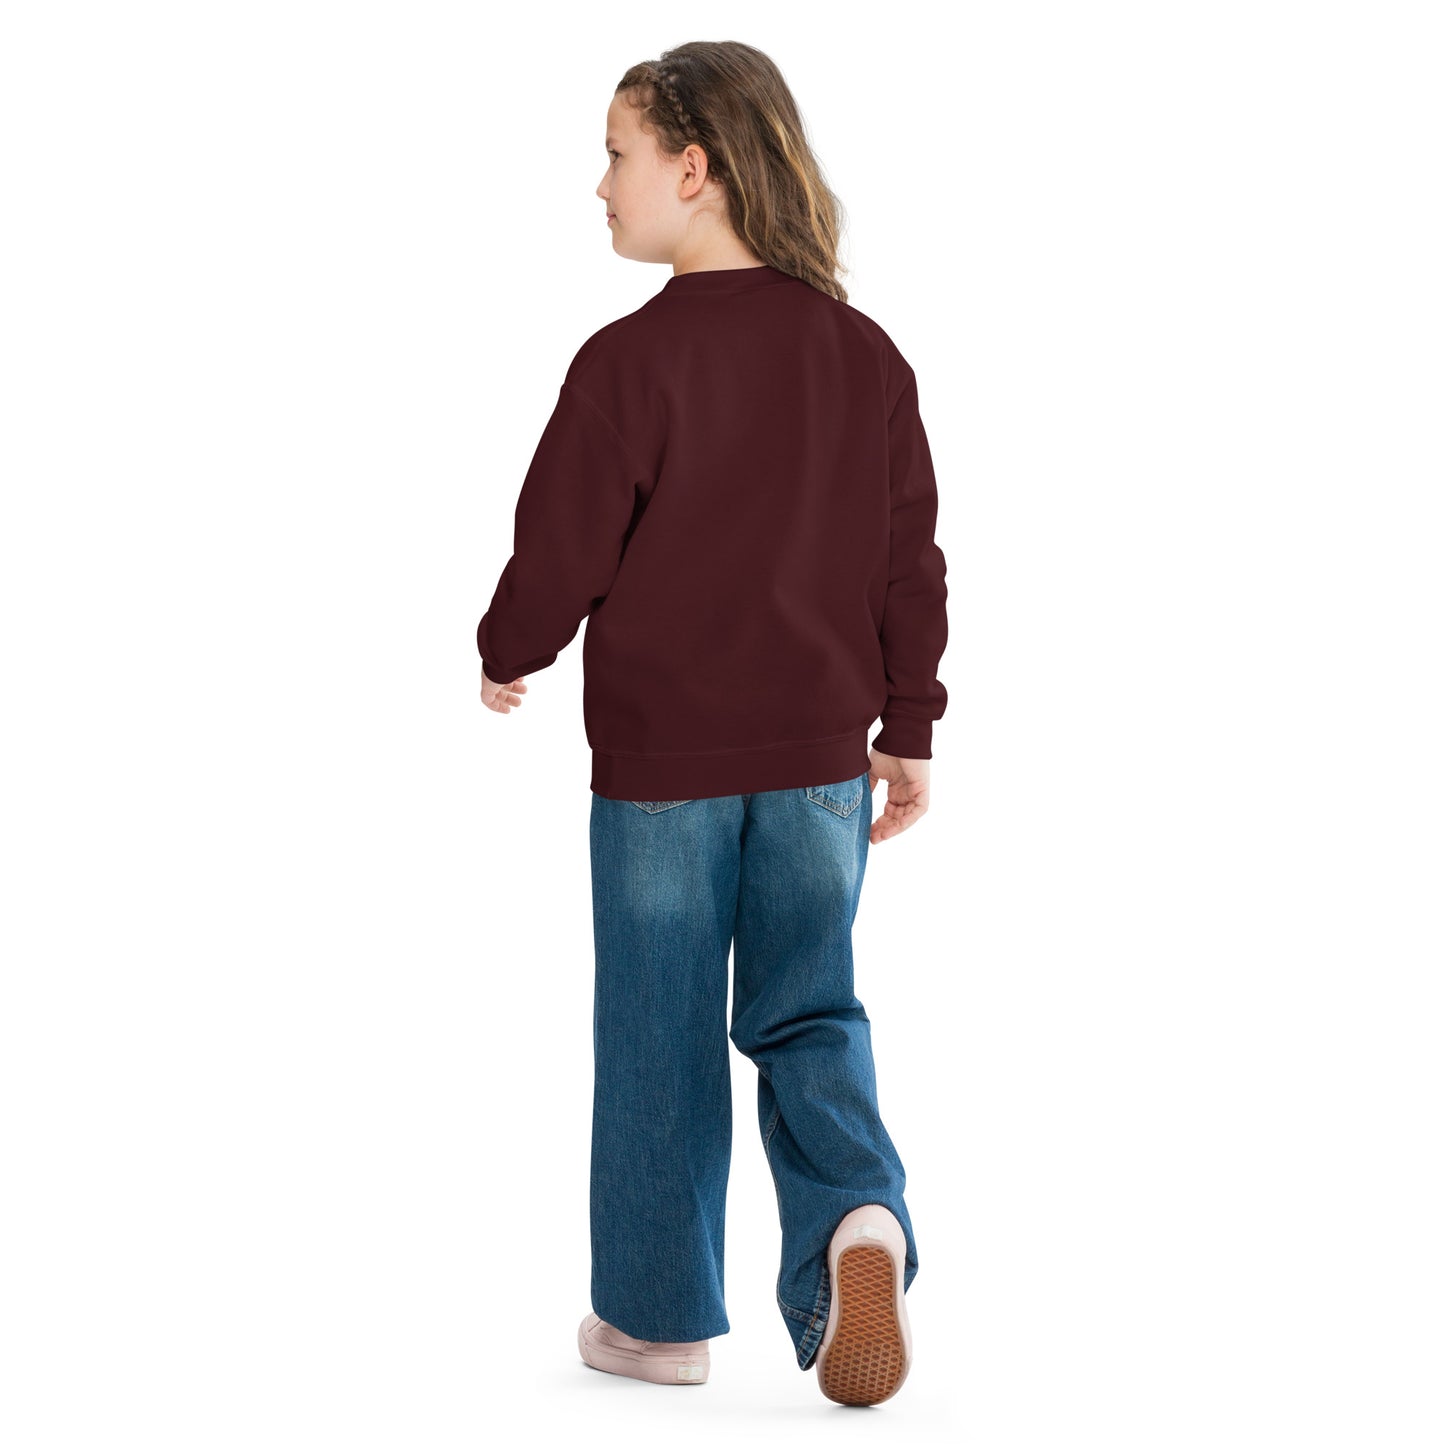 a little girl wearing a maroon sweatshirt and jeans